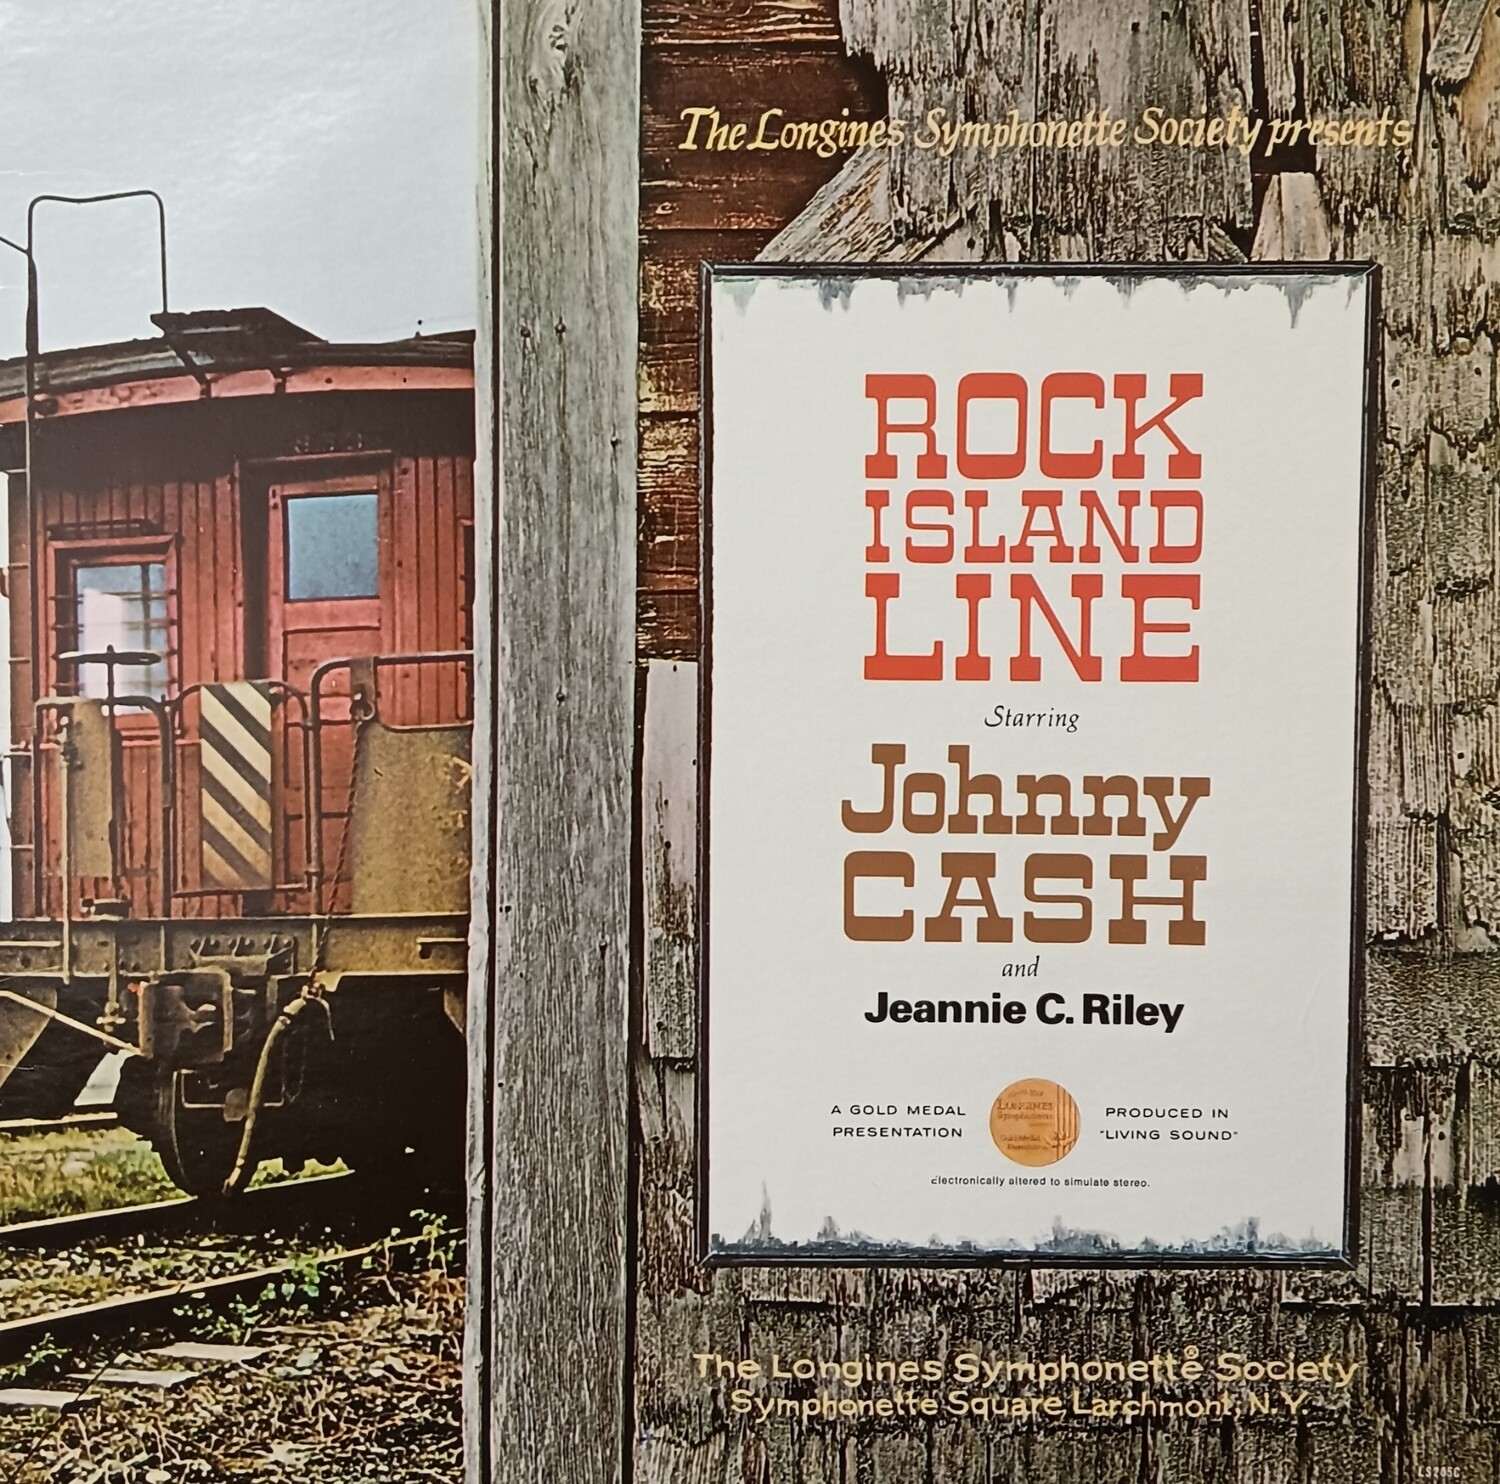 Johnny Cash & Jeannie C. Riley - Rock Island Line